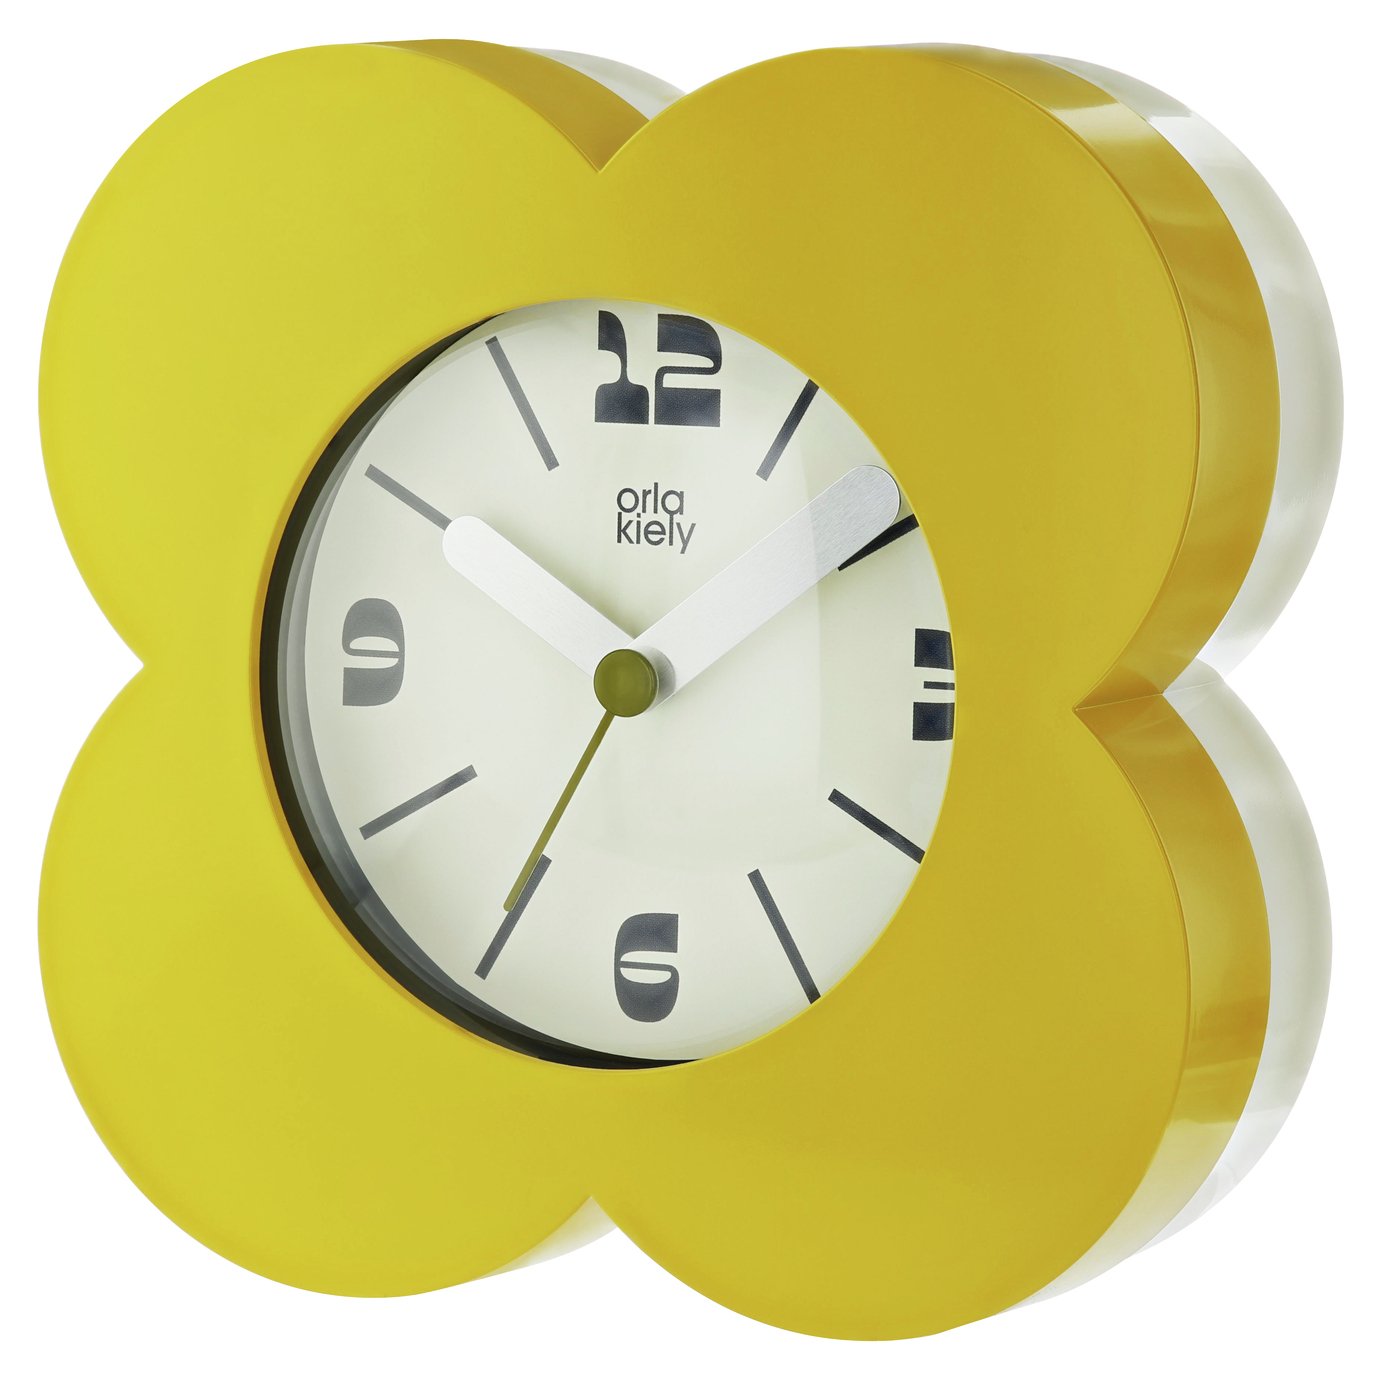 Orla Kiely Alarm Clock - Mustard & Cream